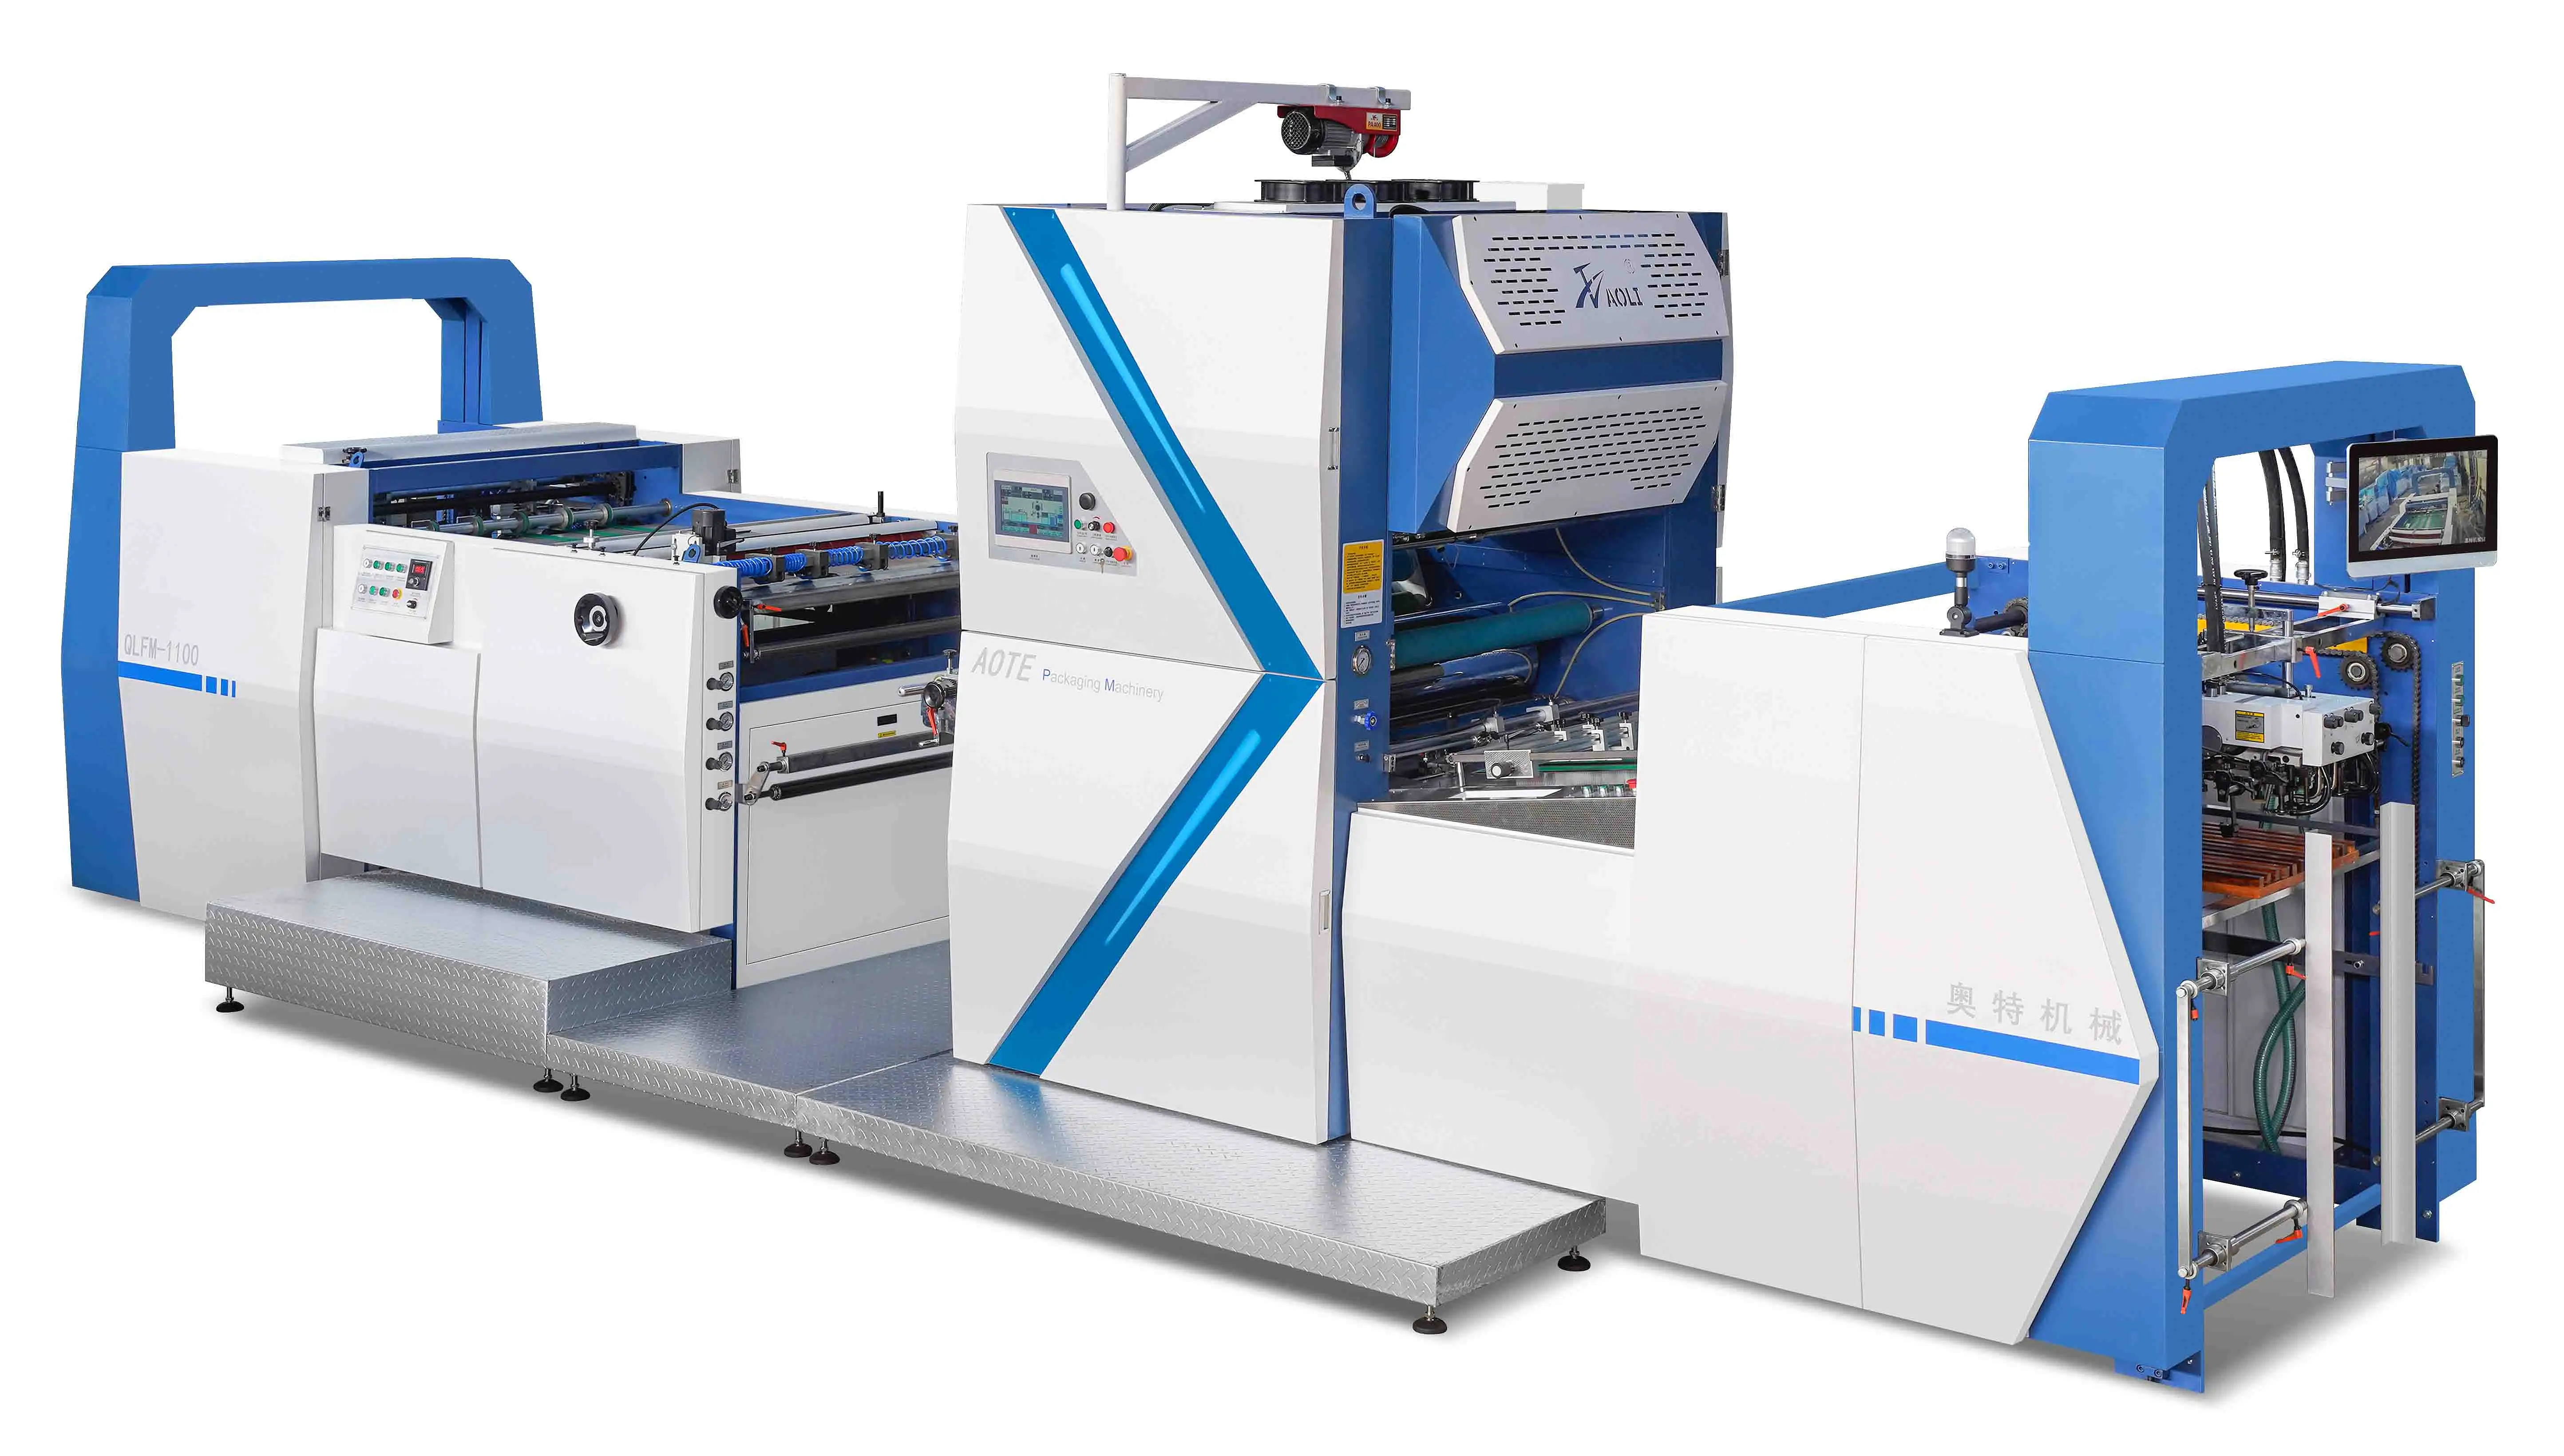 QLFM-1100A fully automatic vertical lamination machine standard configuration